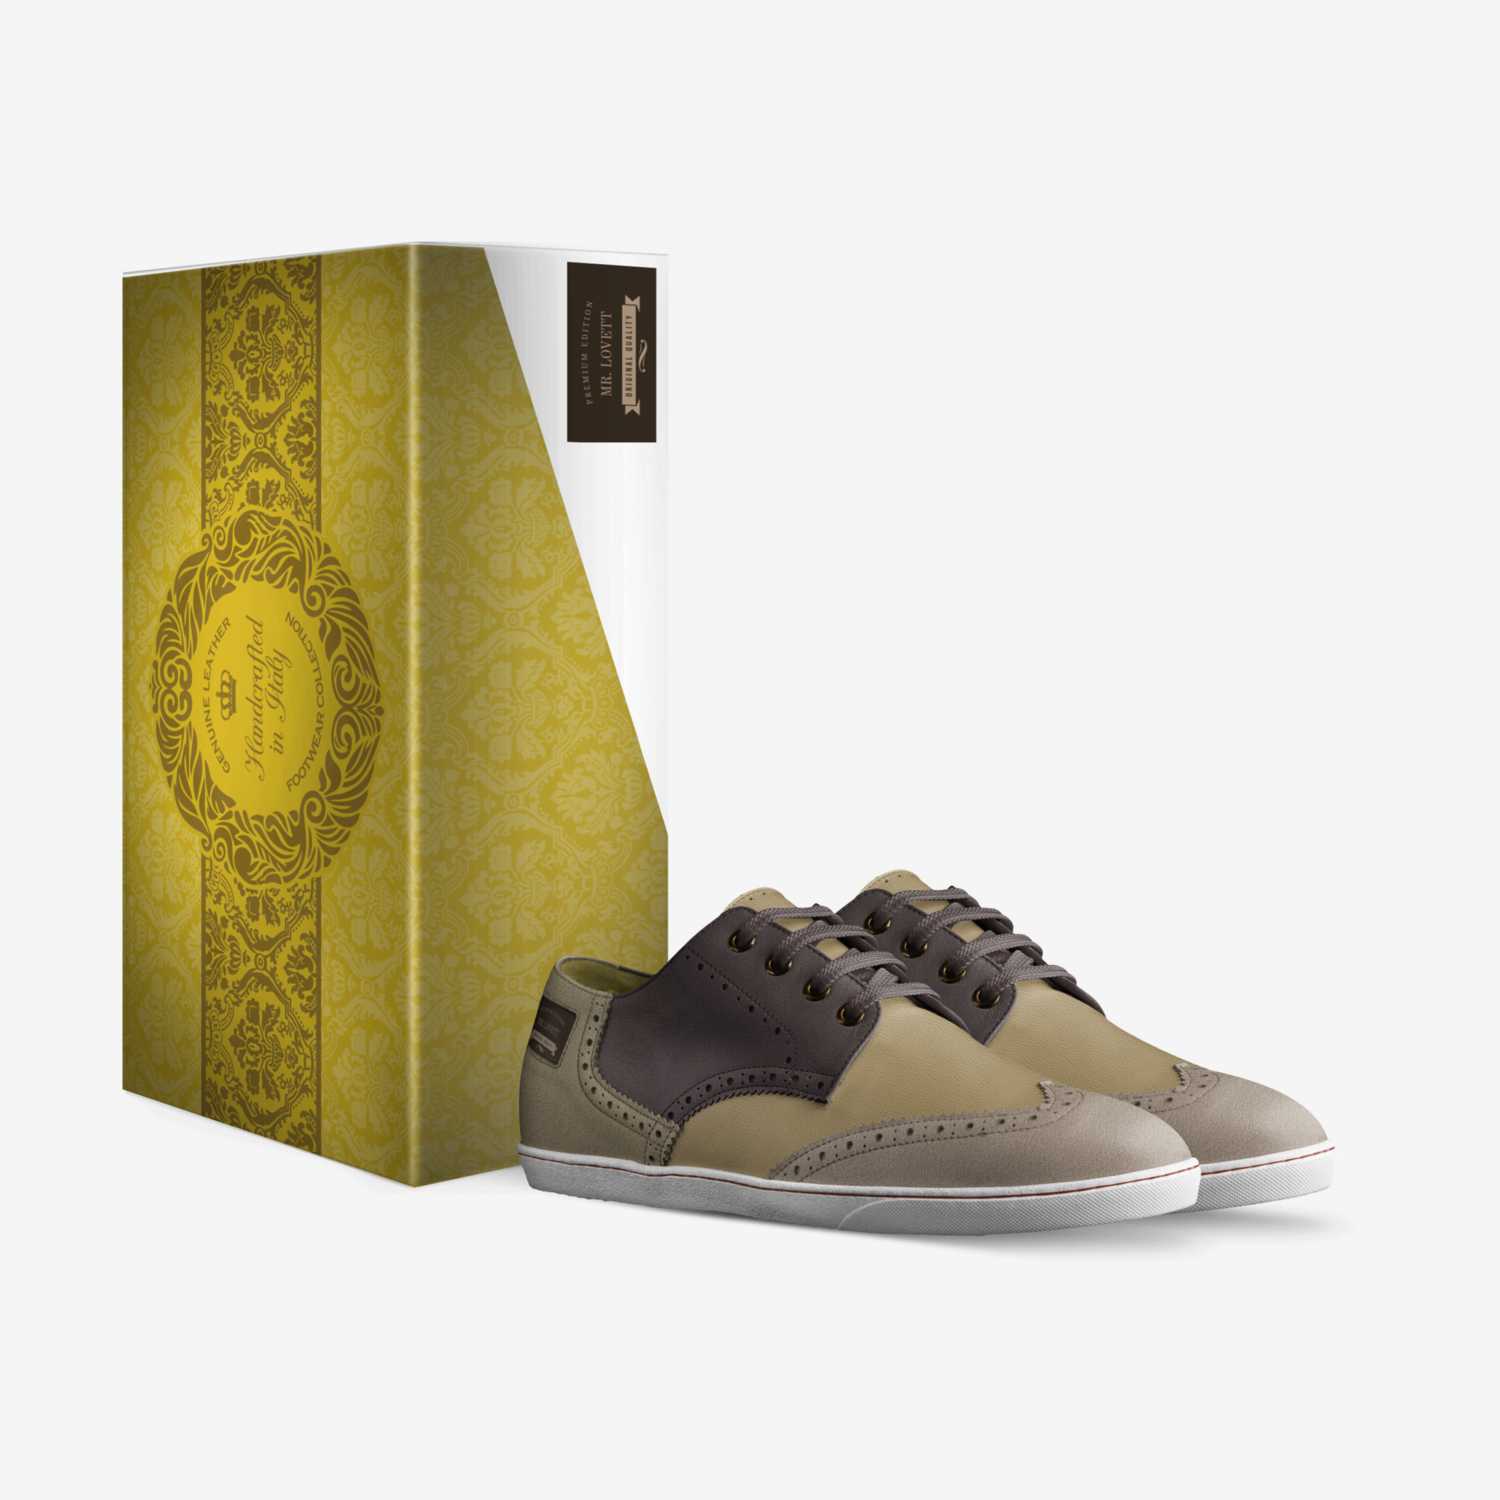 mr. lovett custom made in Italy shoes by Kyle Lovett | Box view